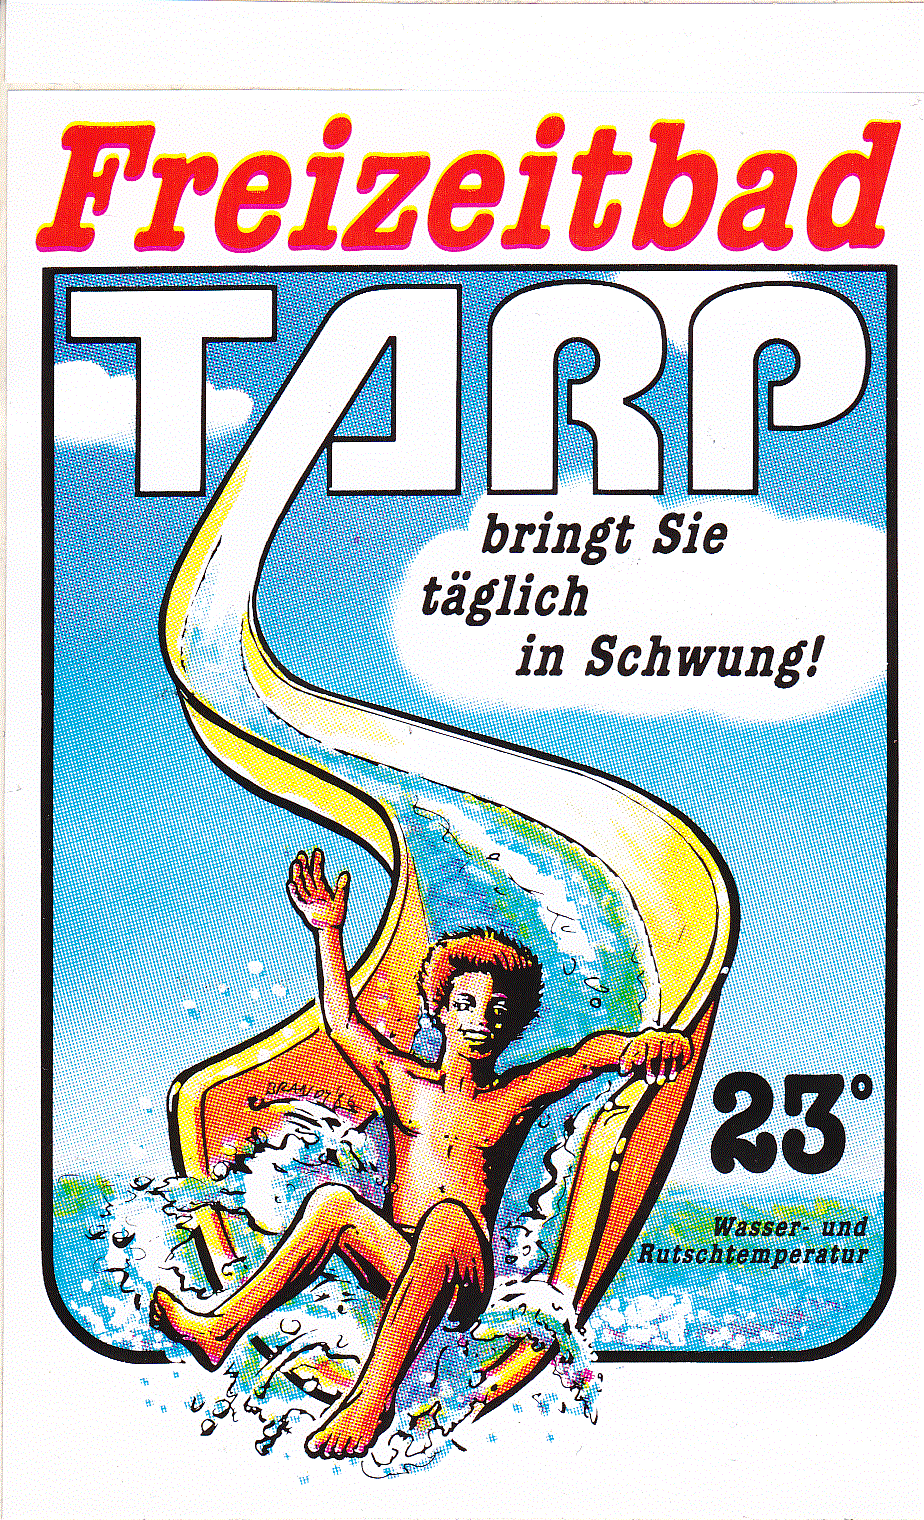 Förderverein Freizeitbad Tarp e.V.